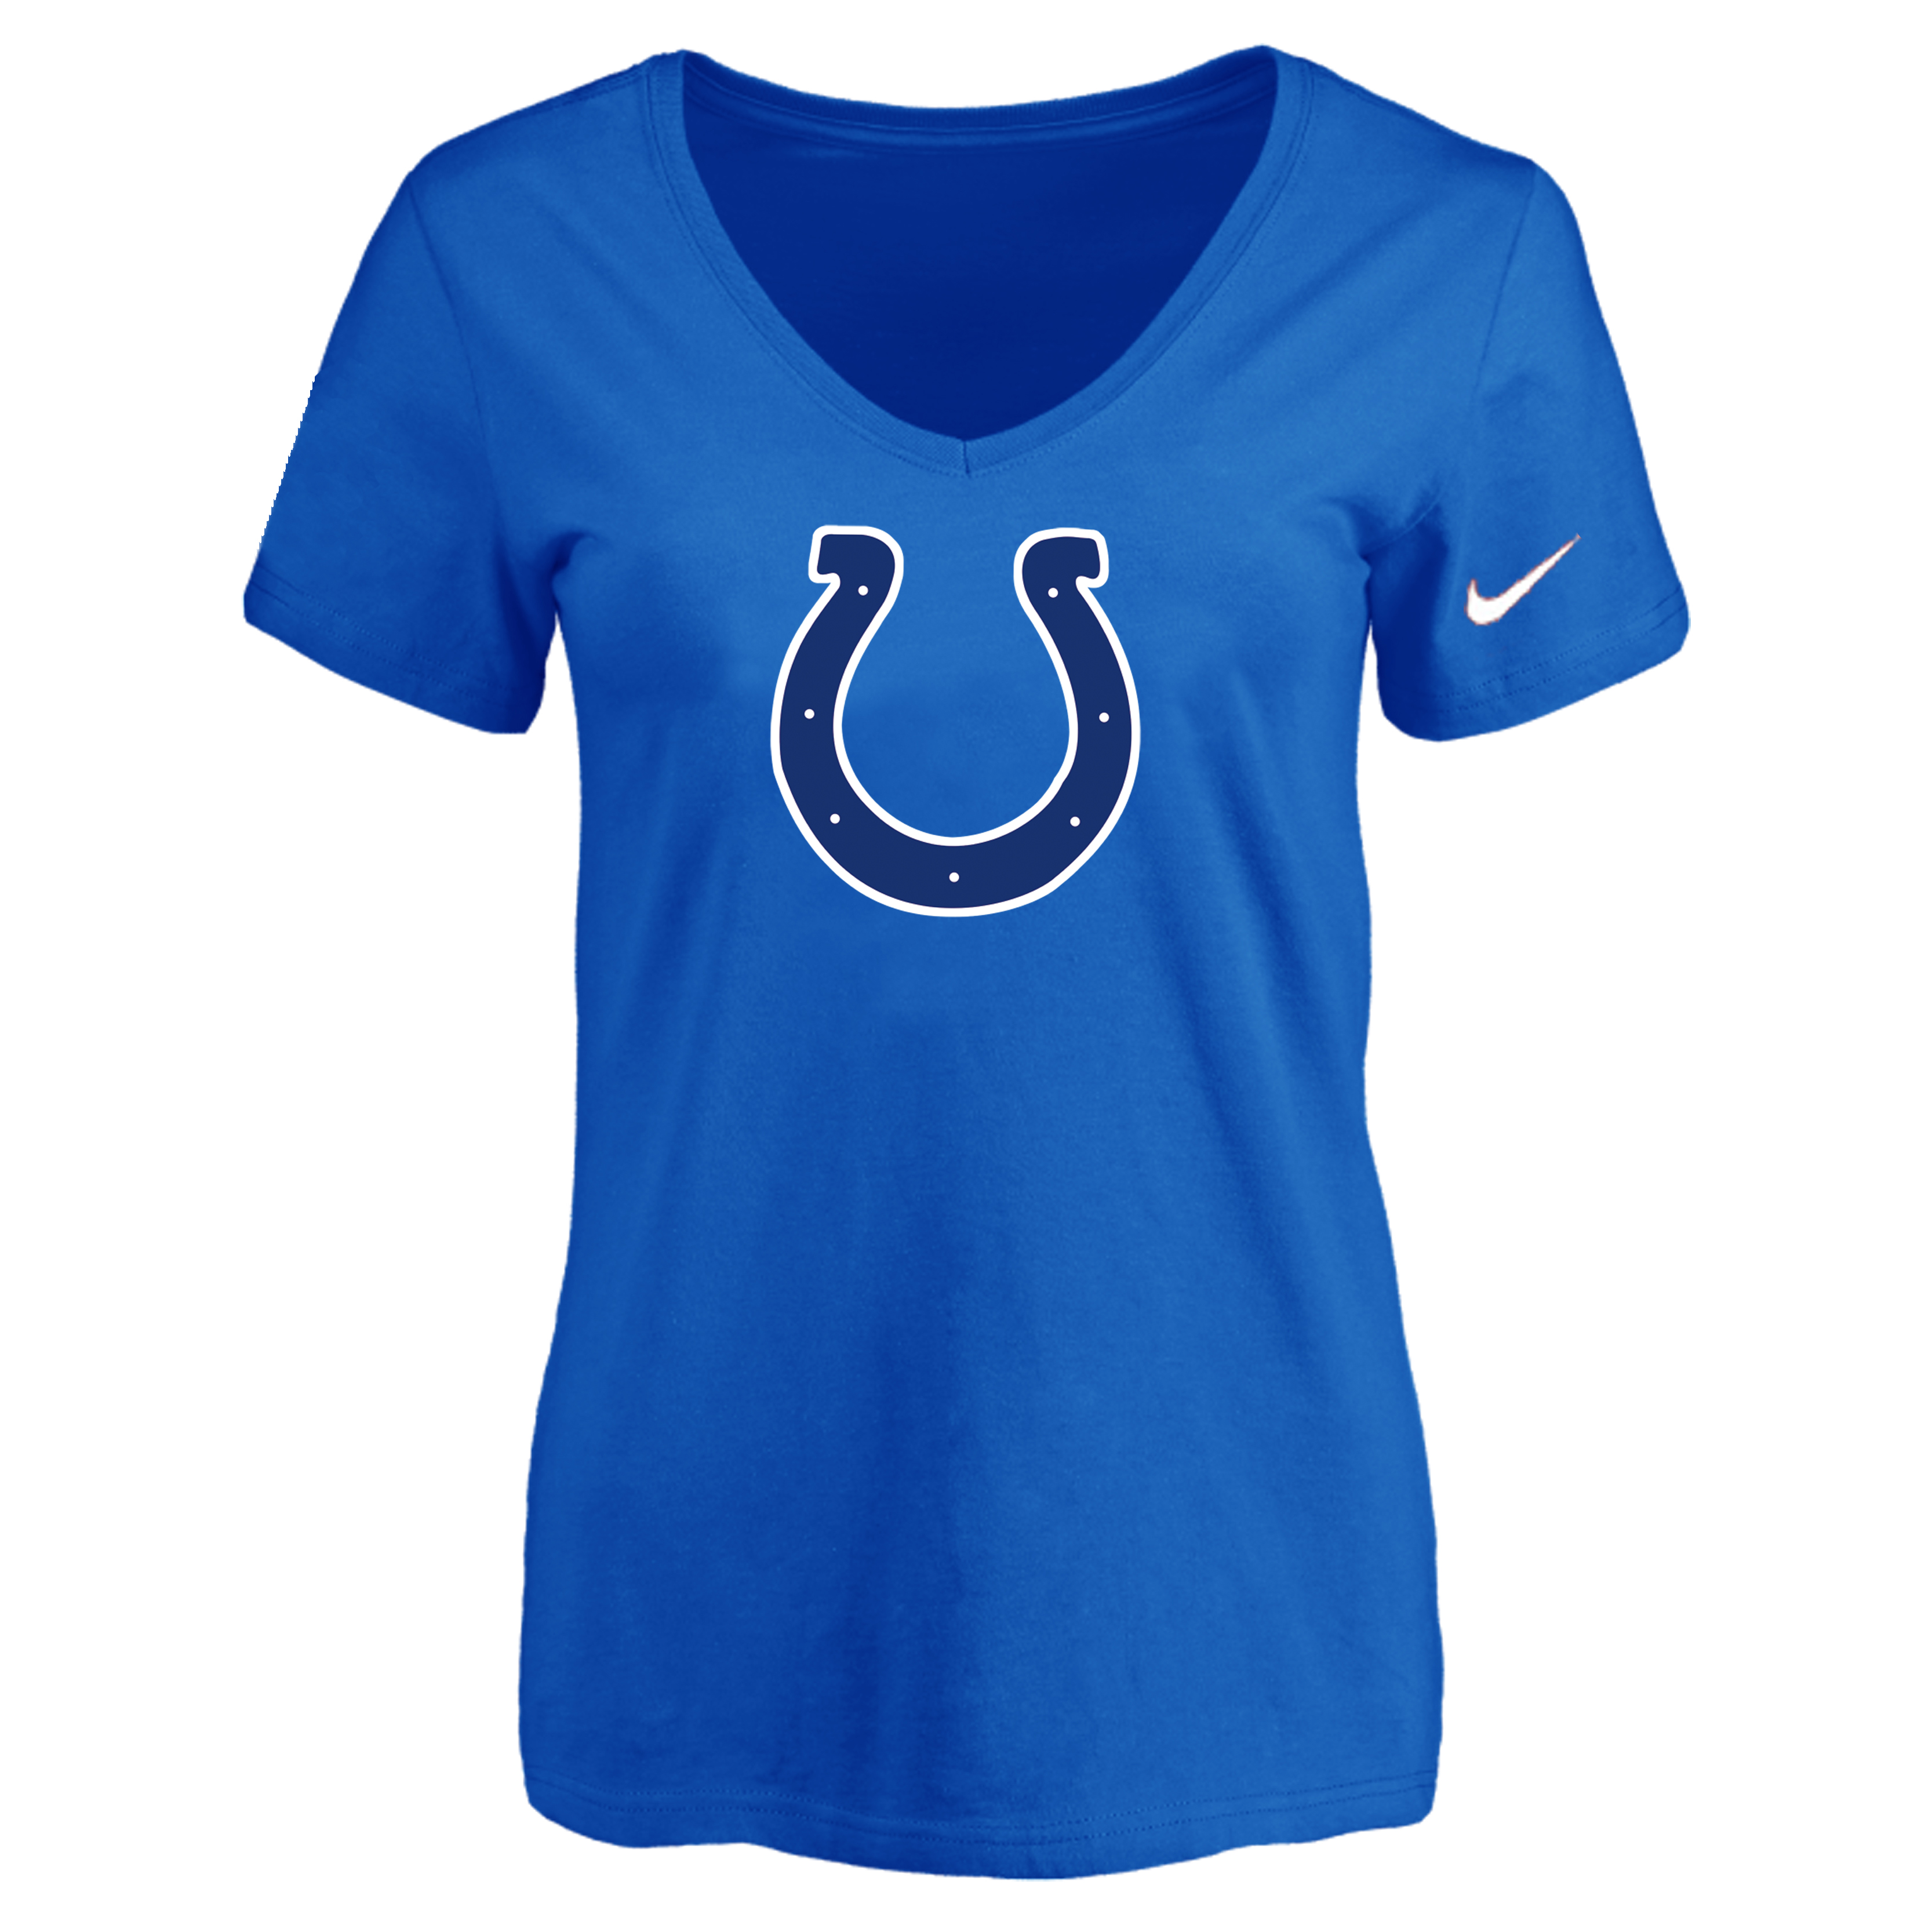 Indiannapolis Colts Blue Women's Logo V neck T-Shirt